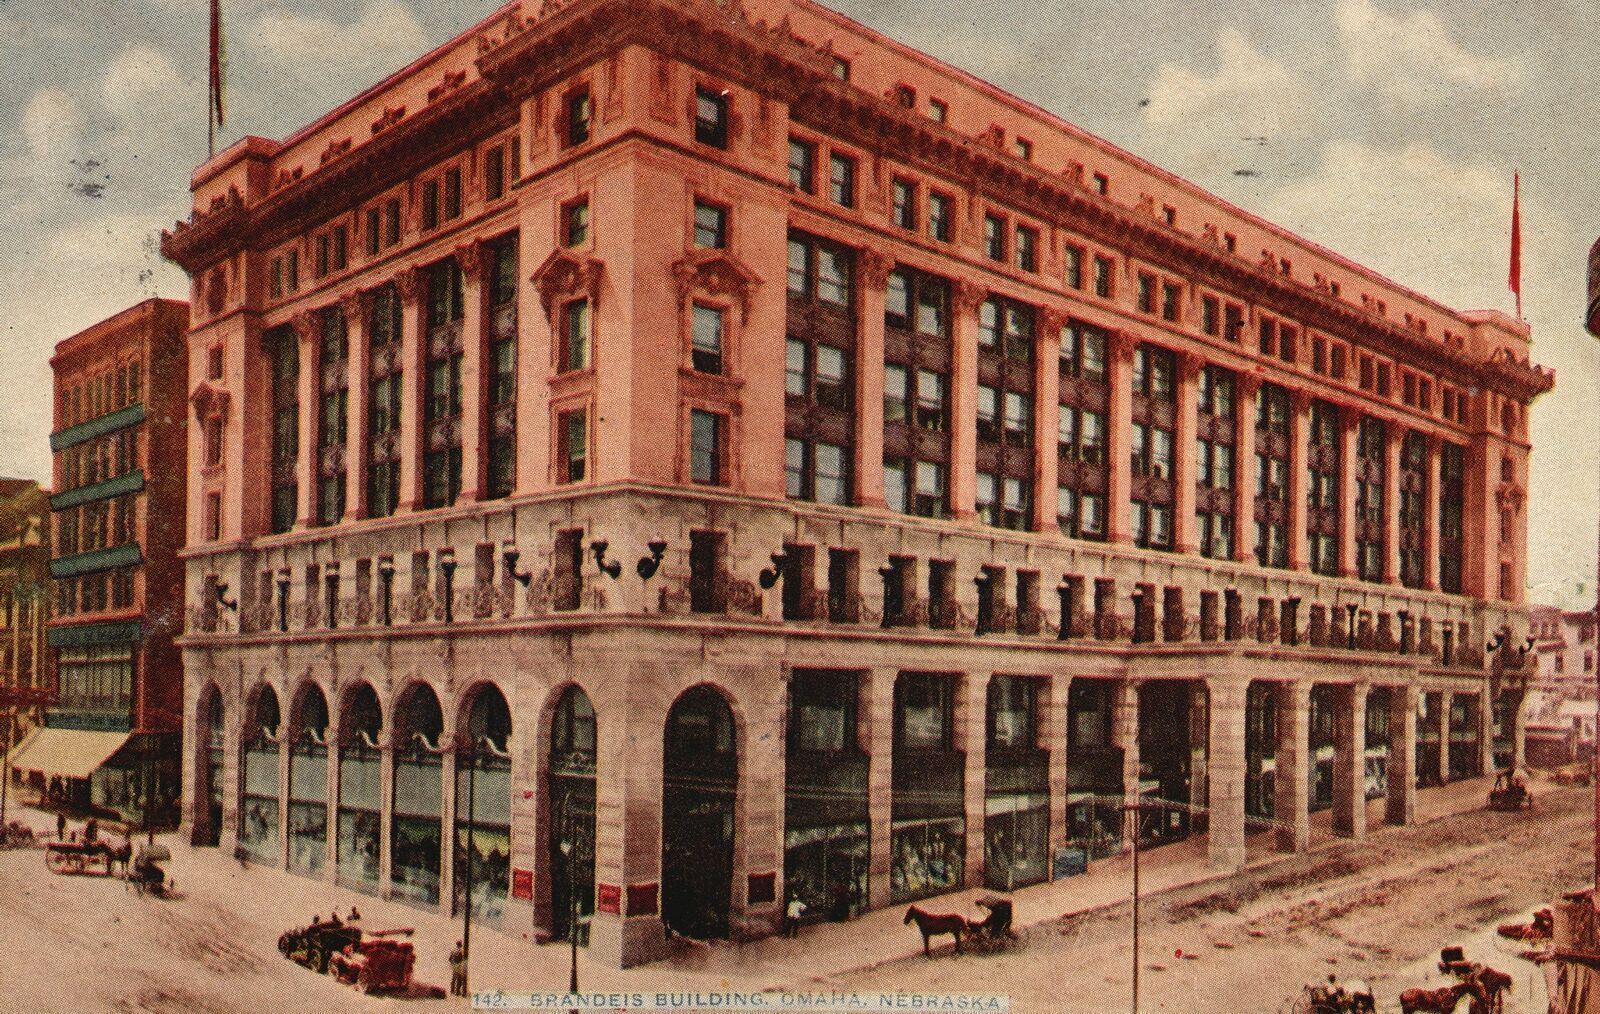 Omaha Nebraska NB, Brandeis Department Store Building Vintage Postcard